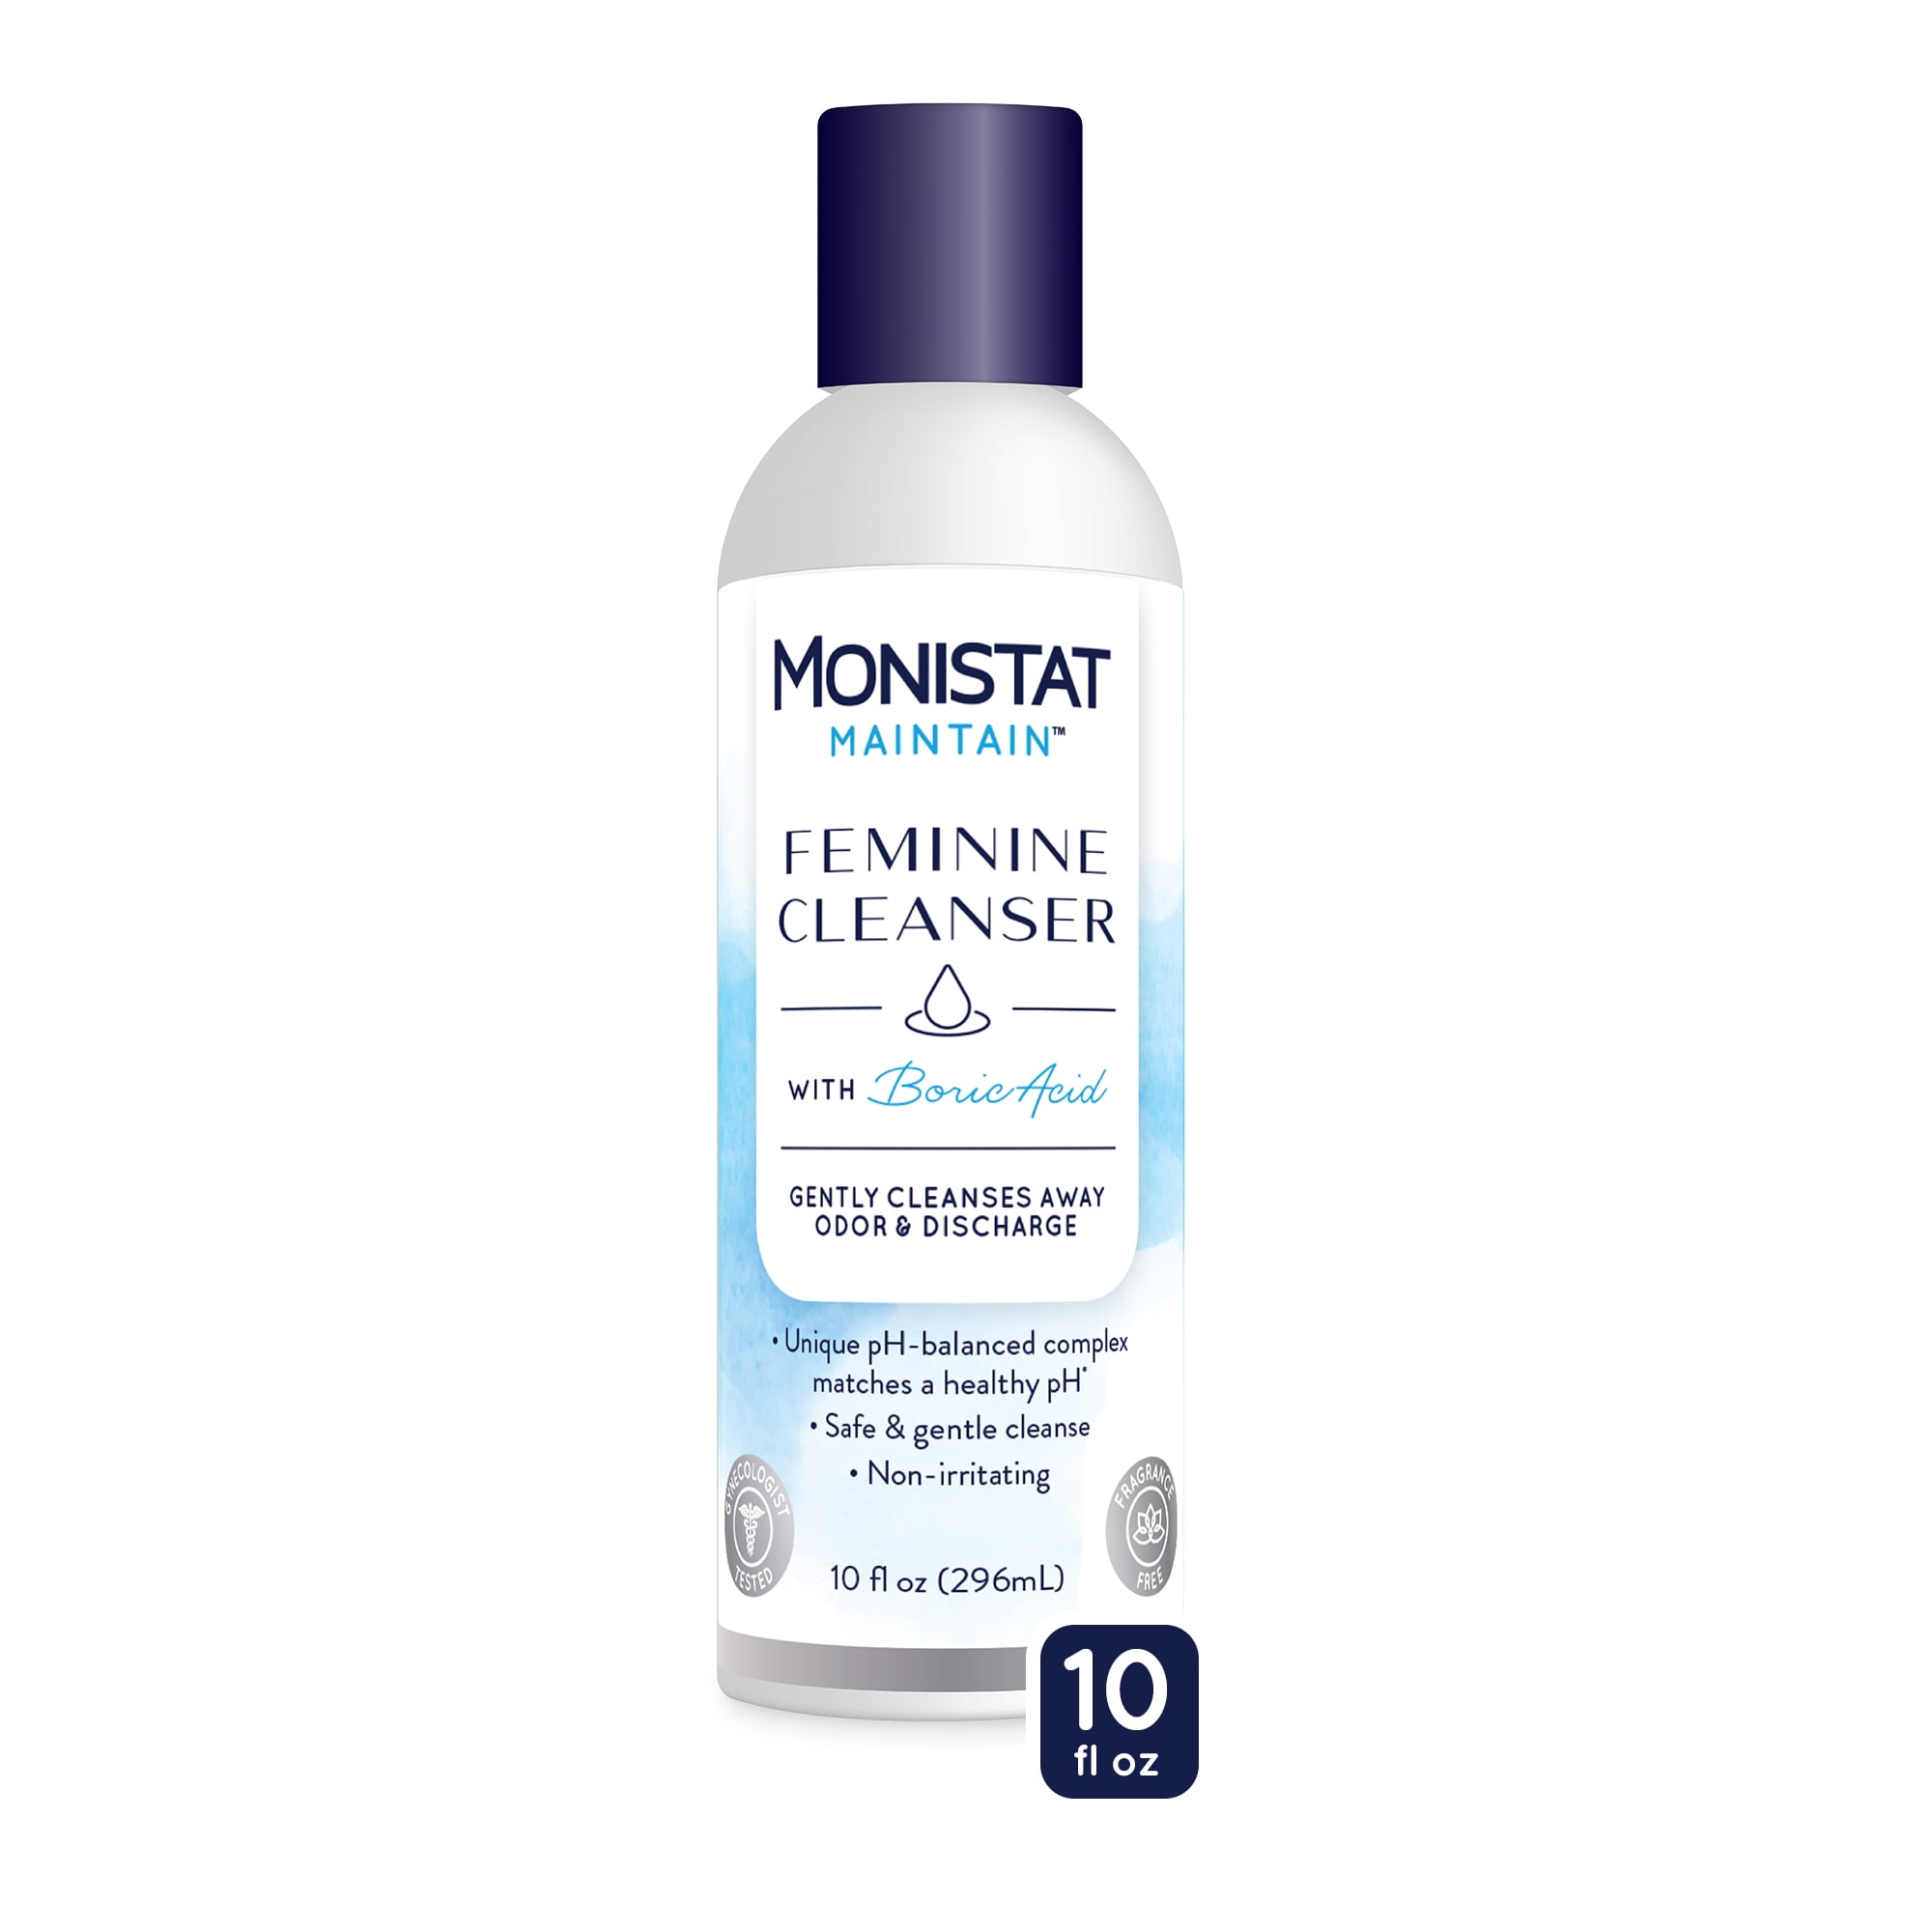 MONISTAT Maintain Feminine Cleanser with Boric Acid, Fragrance Free, Washes Away Odor, 10 fl oz